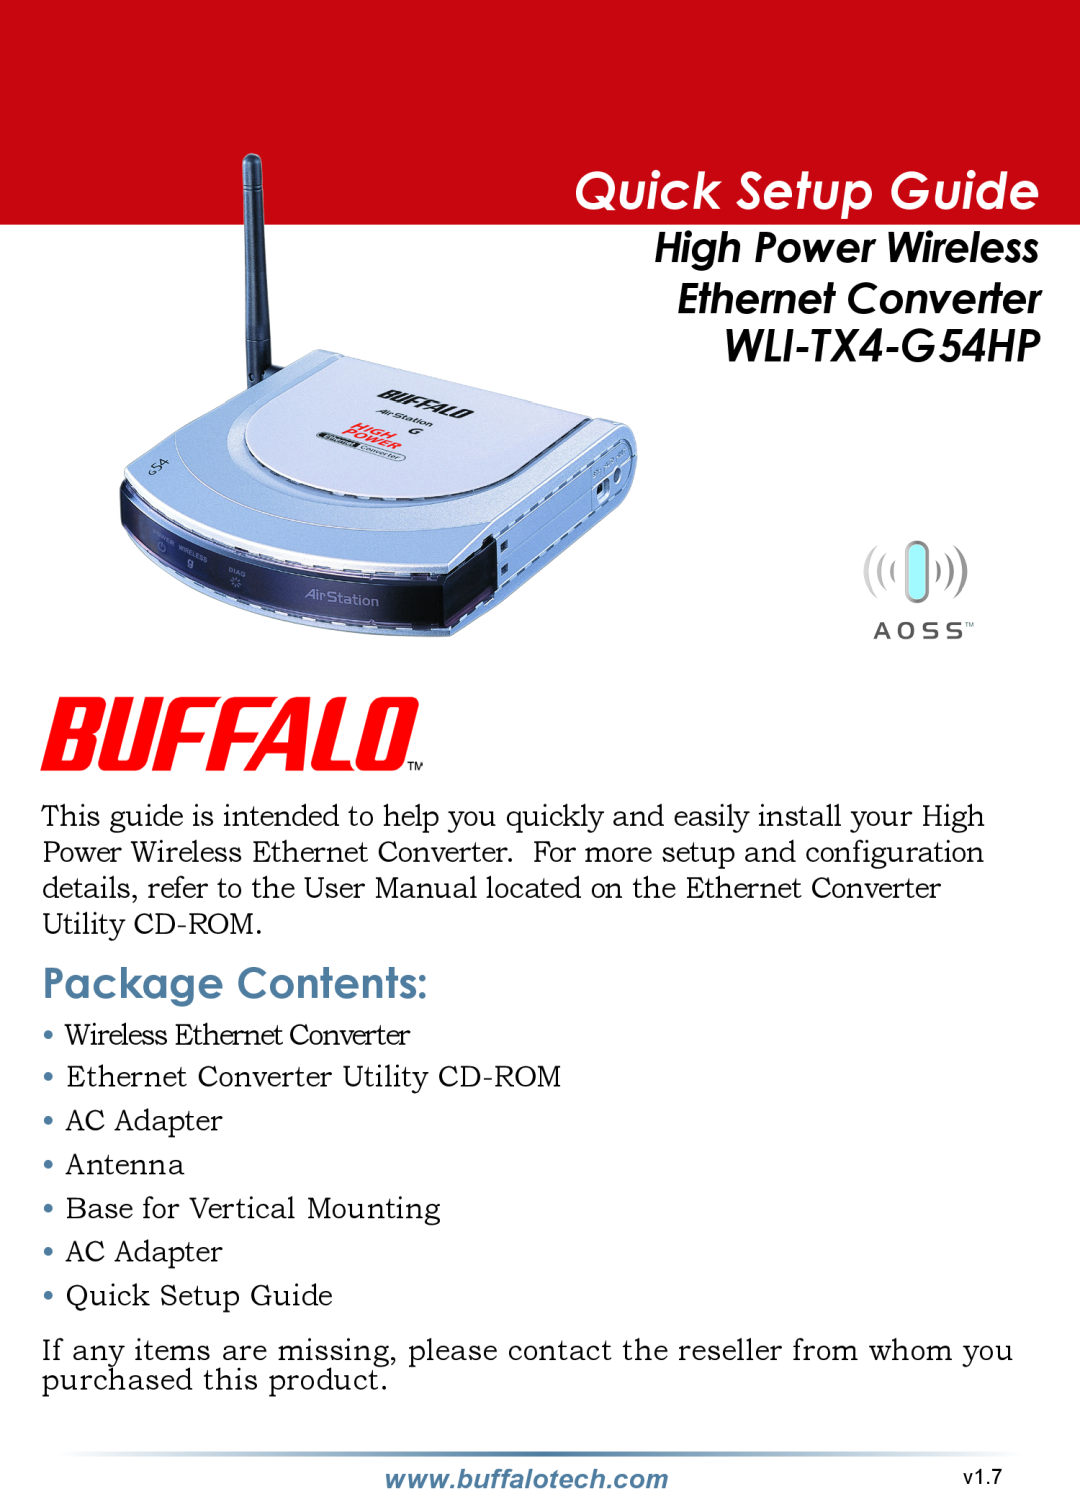 Buffalo Technology WLI-TX4-G54HP setup guide Package Contents, Quick Setup Guide, High Power Wireless Ethernet Converter 